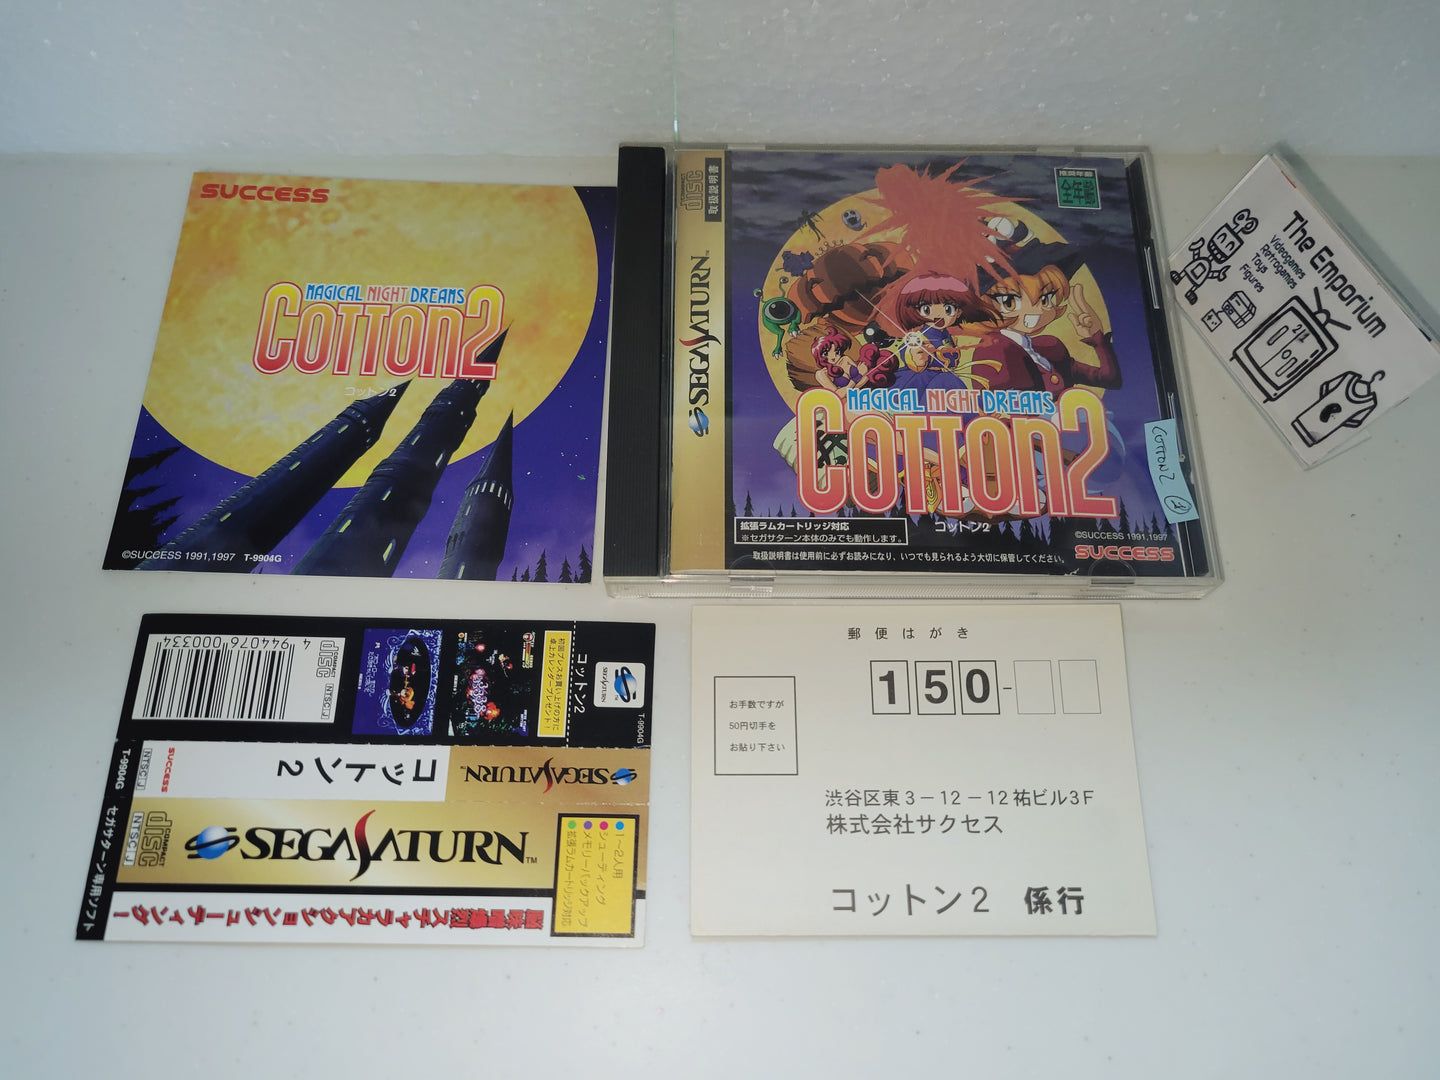 Cotton 2 - Sega Saturn SegaSaturn